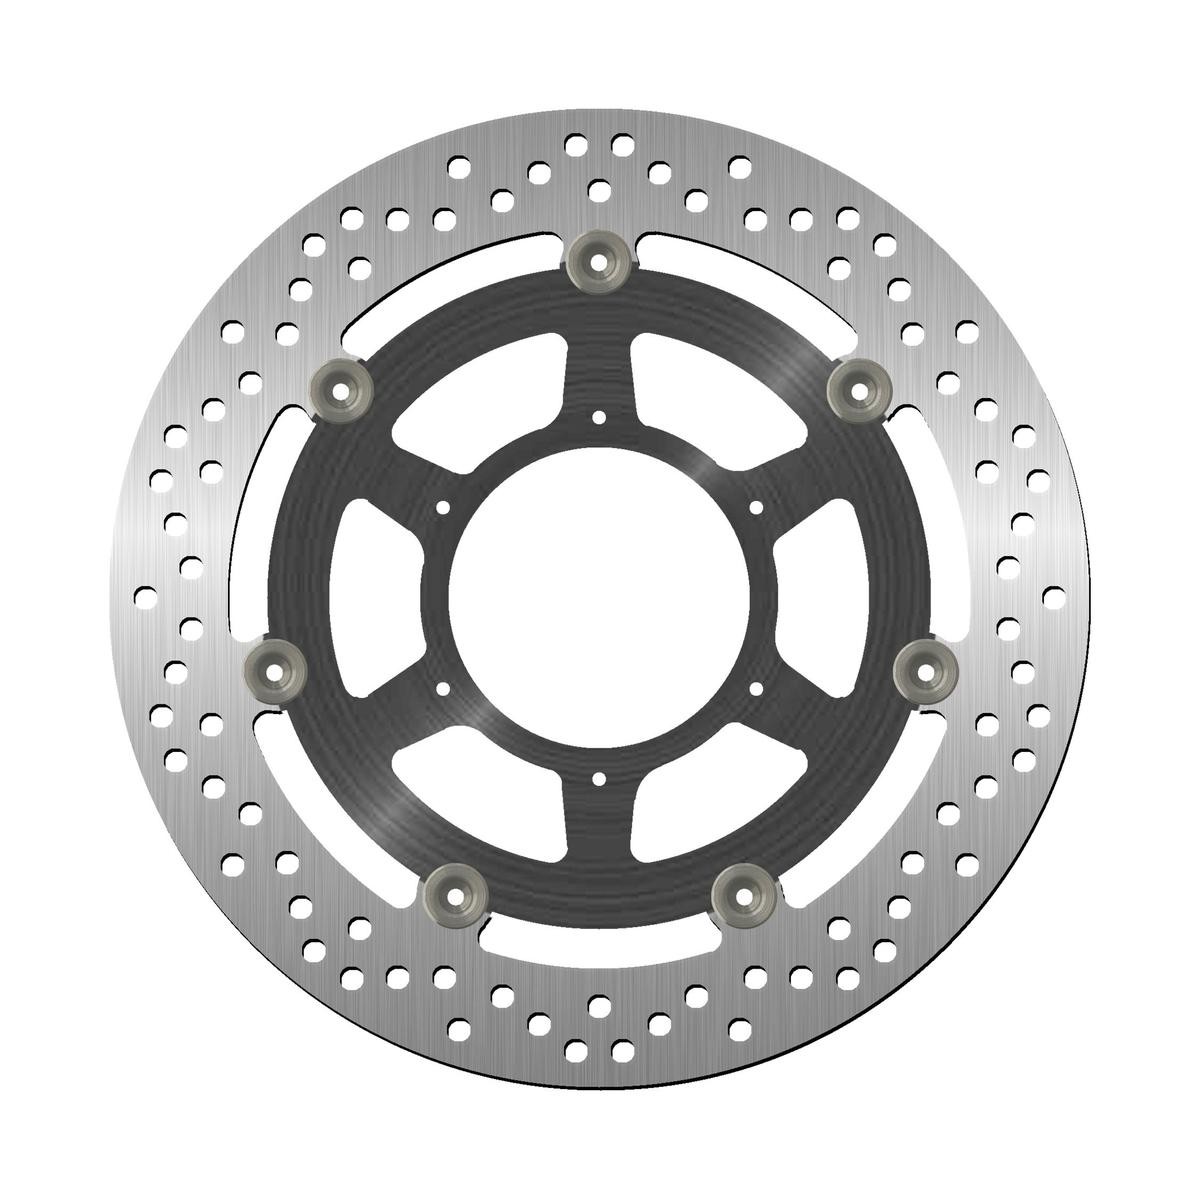 NG Front, 296x4.5mm, 6 Ø: 296mm, Num. of holes: 6, Brake Disc Thickness: 4.5mm Brake rotor 1581G buy